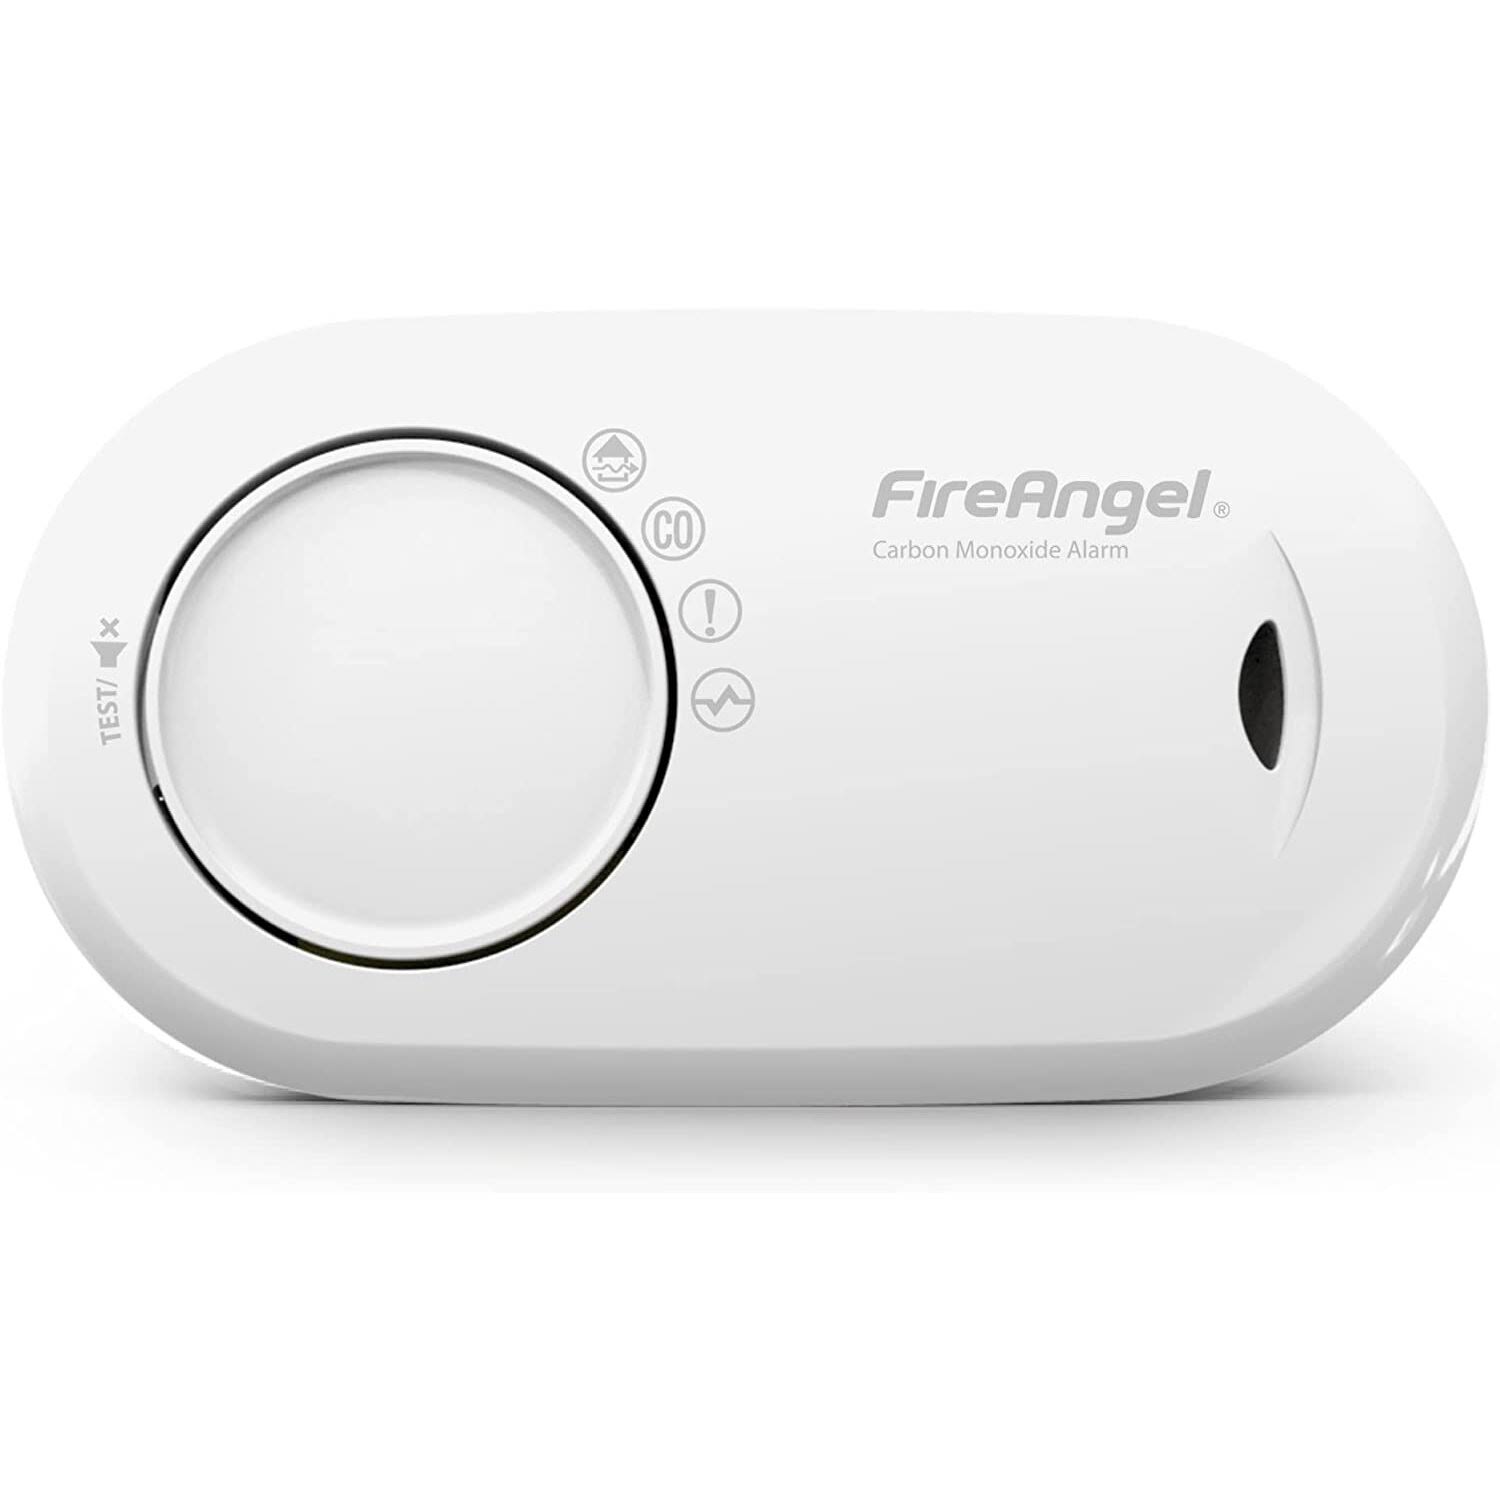 FireAngel Carbon Monoxide Alarm - 10 Year Life